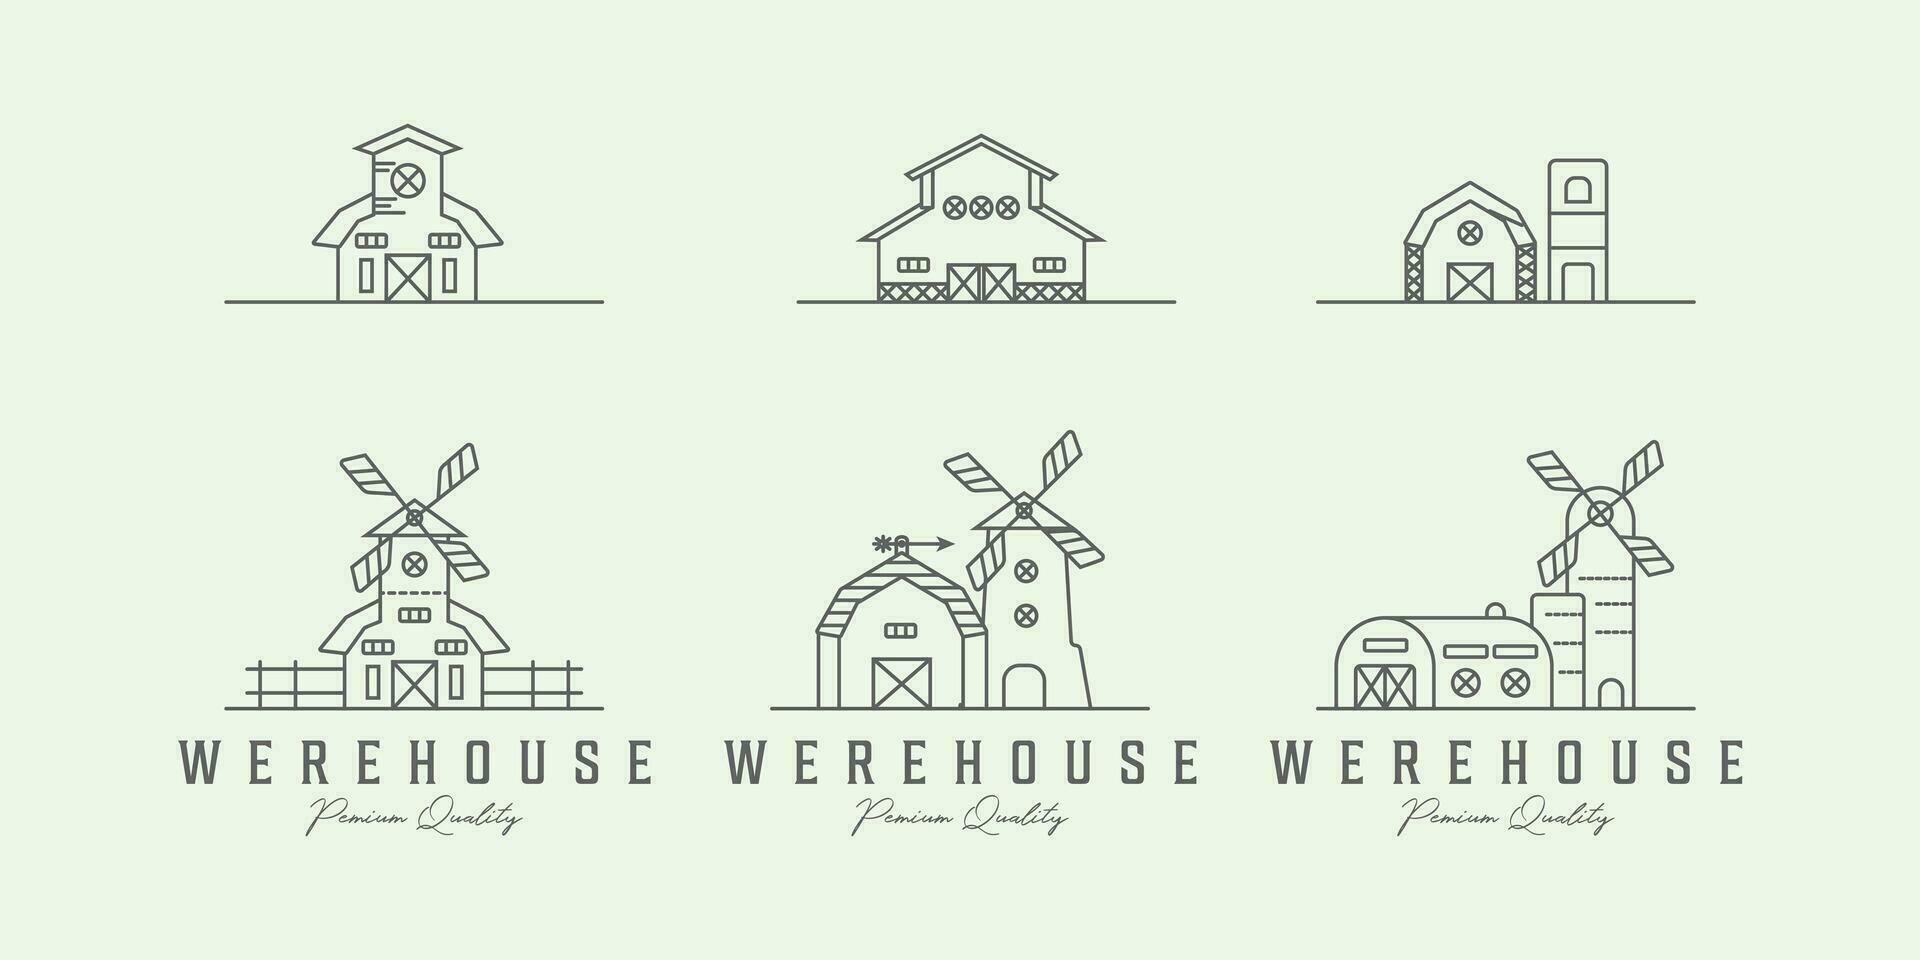 set were house vintage icon logo minimalist line art illustration design from role vector